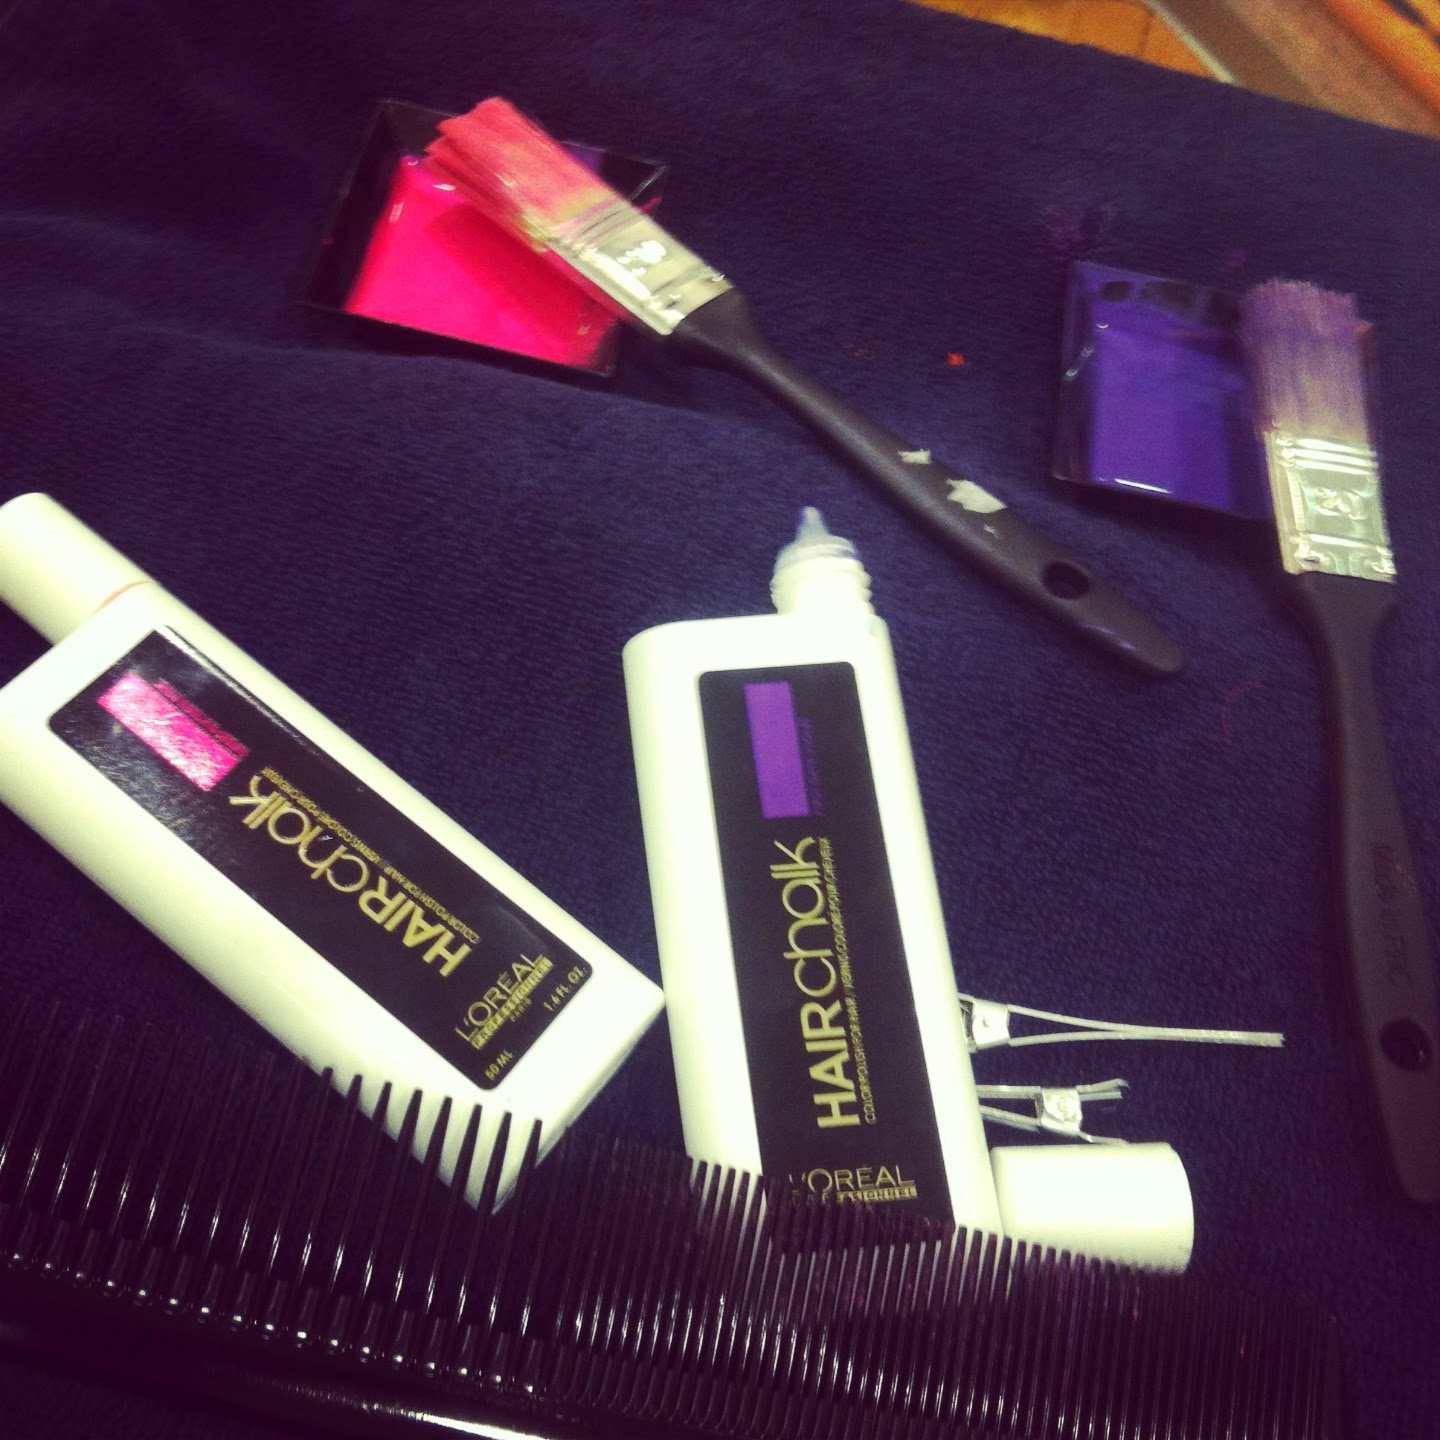 Hair Chalk L'Oréal prezzo, ombre hair viola rosa, dip dye viola rosa, luciano colombo milano